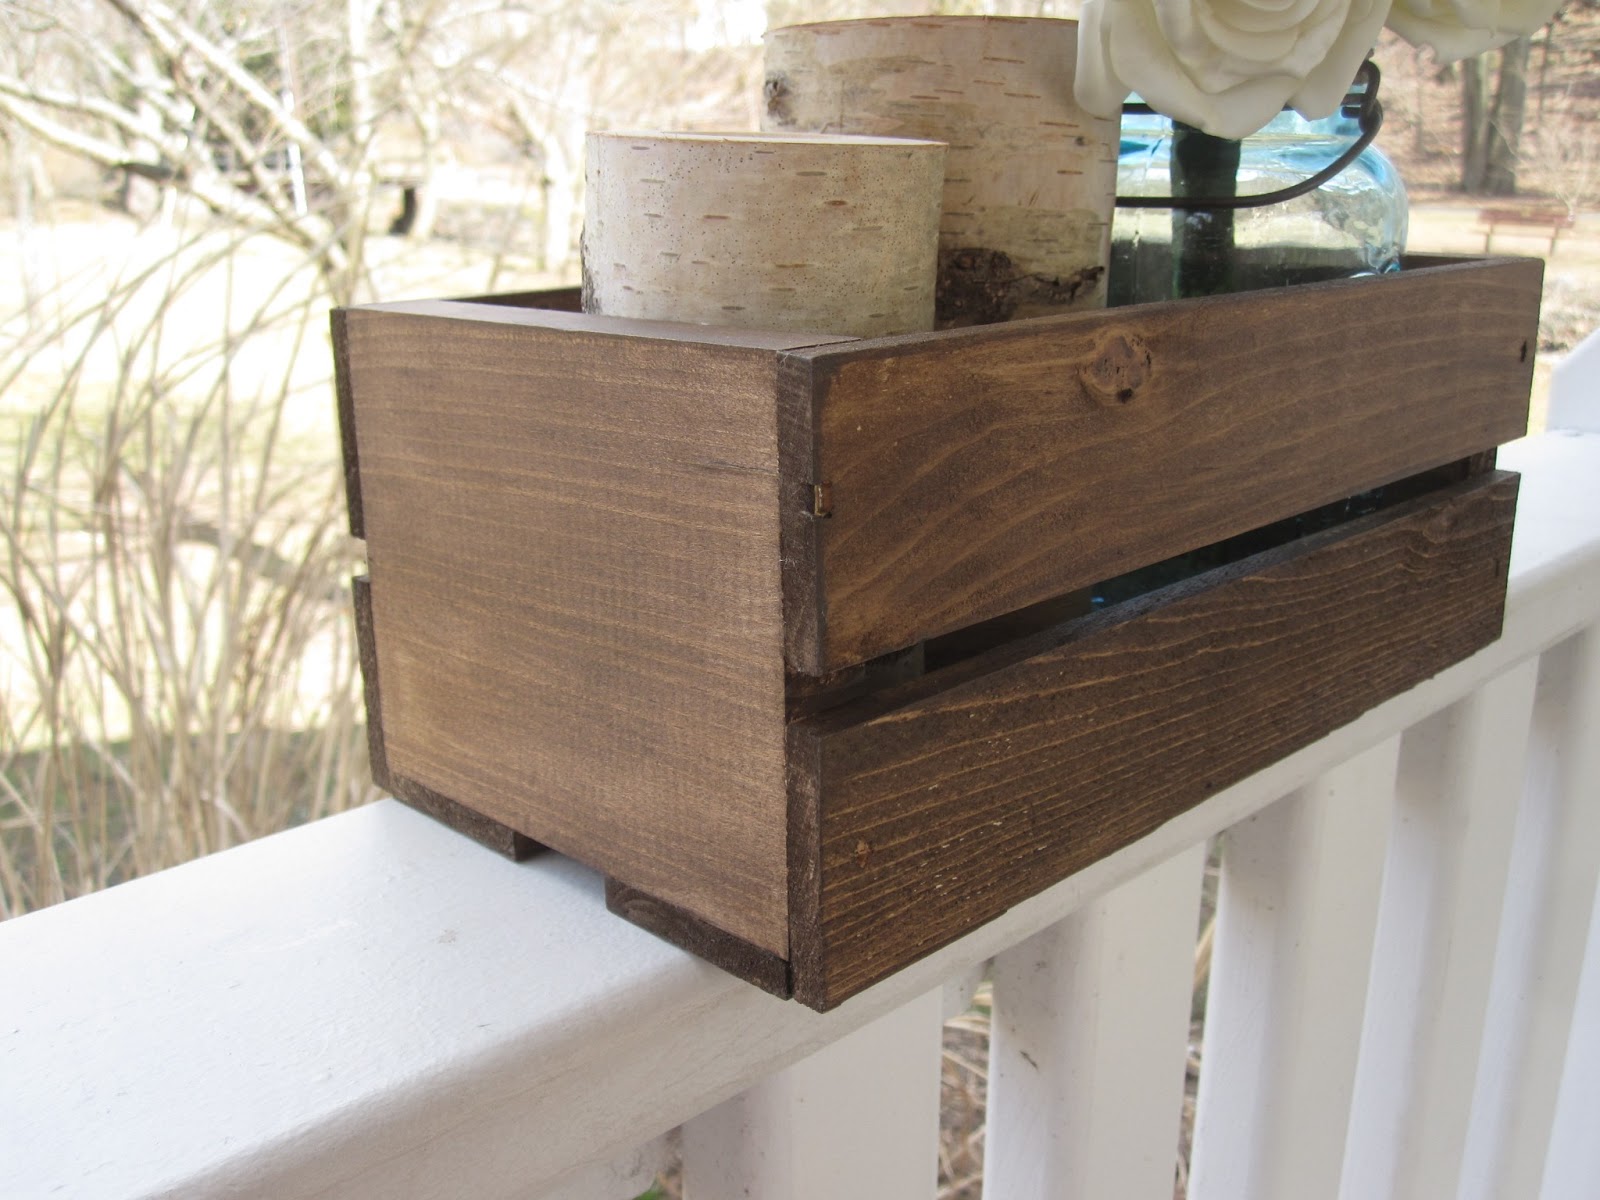 The Botanical Box: DIY Wood Planter Box